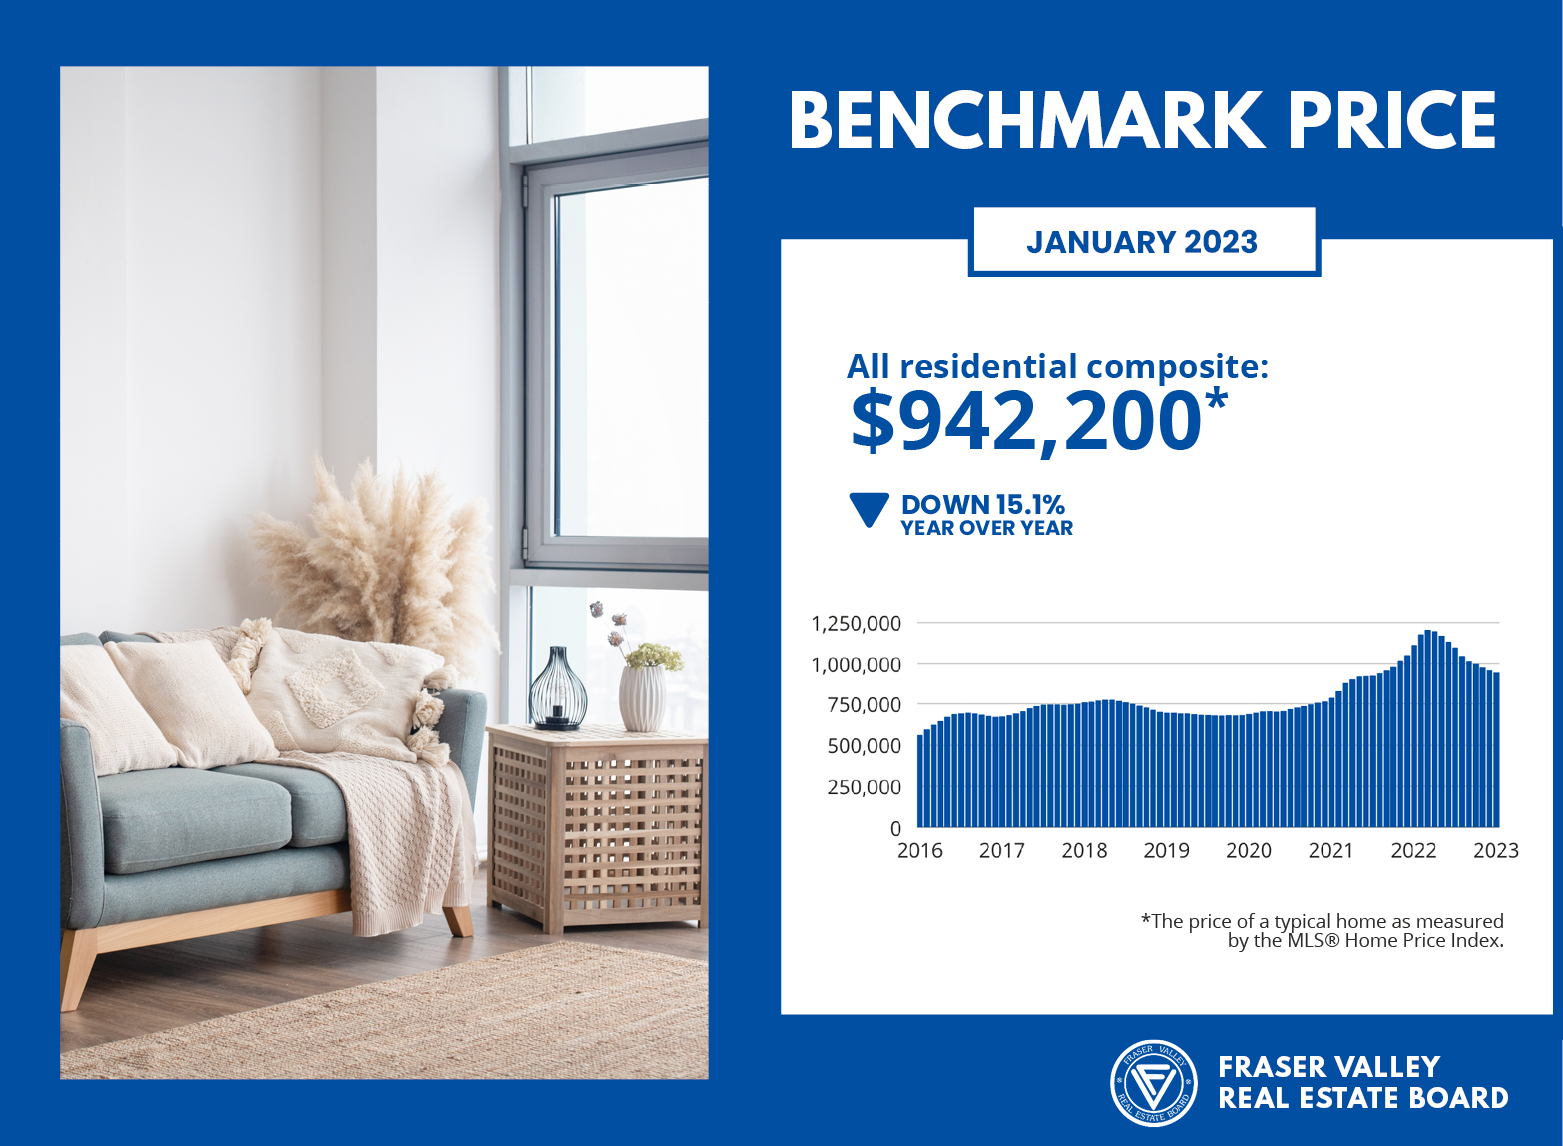 Fraser Valley Housing Market Statistics - January 2023 Benchmark Price